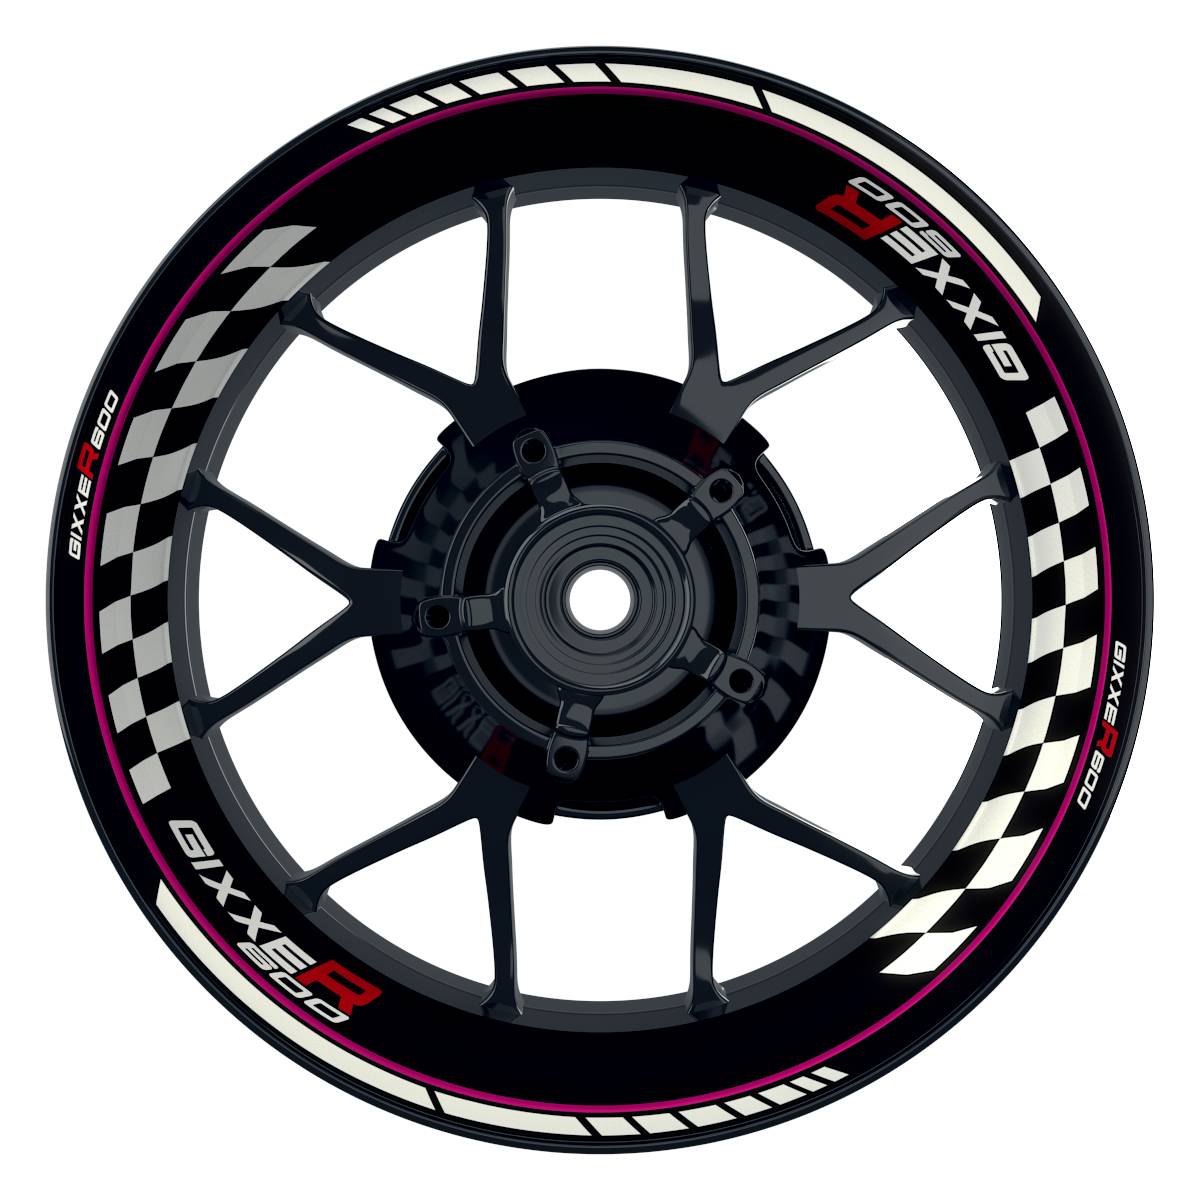 GIXXER600 Grid schwarz pink Wheelsticker Felgenaufkleber